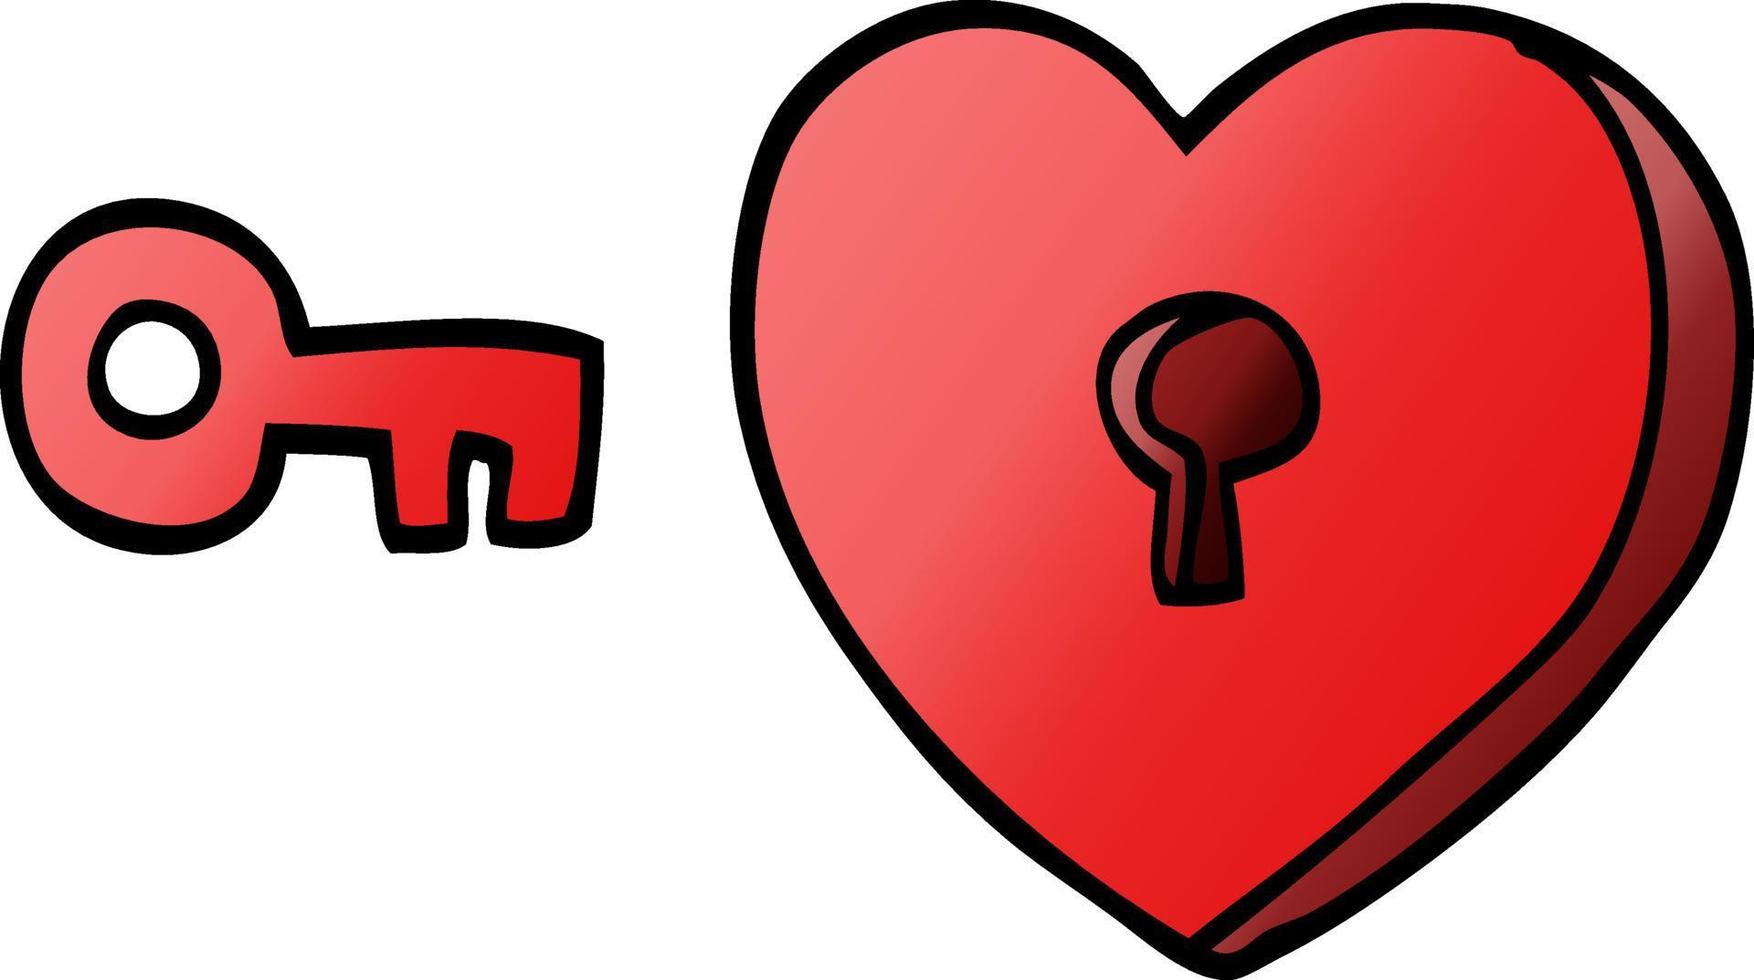 cartoon doodle heart and key vector